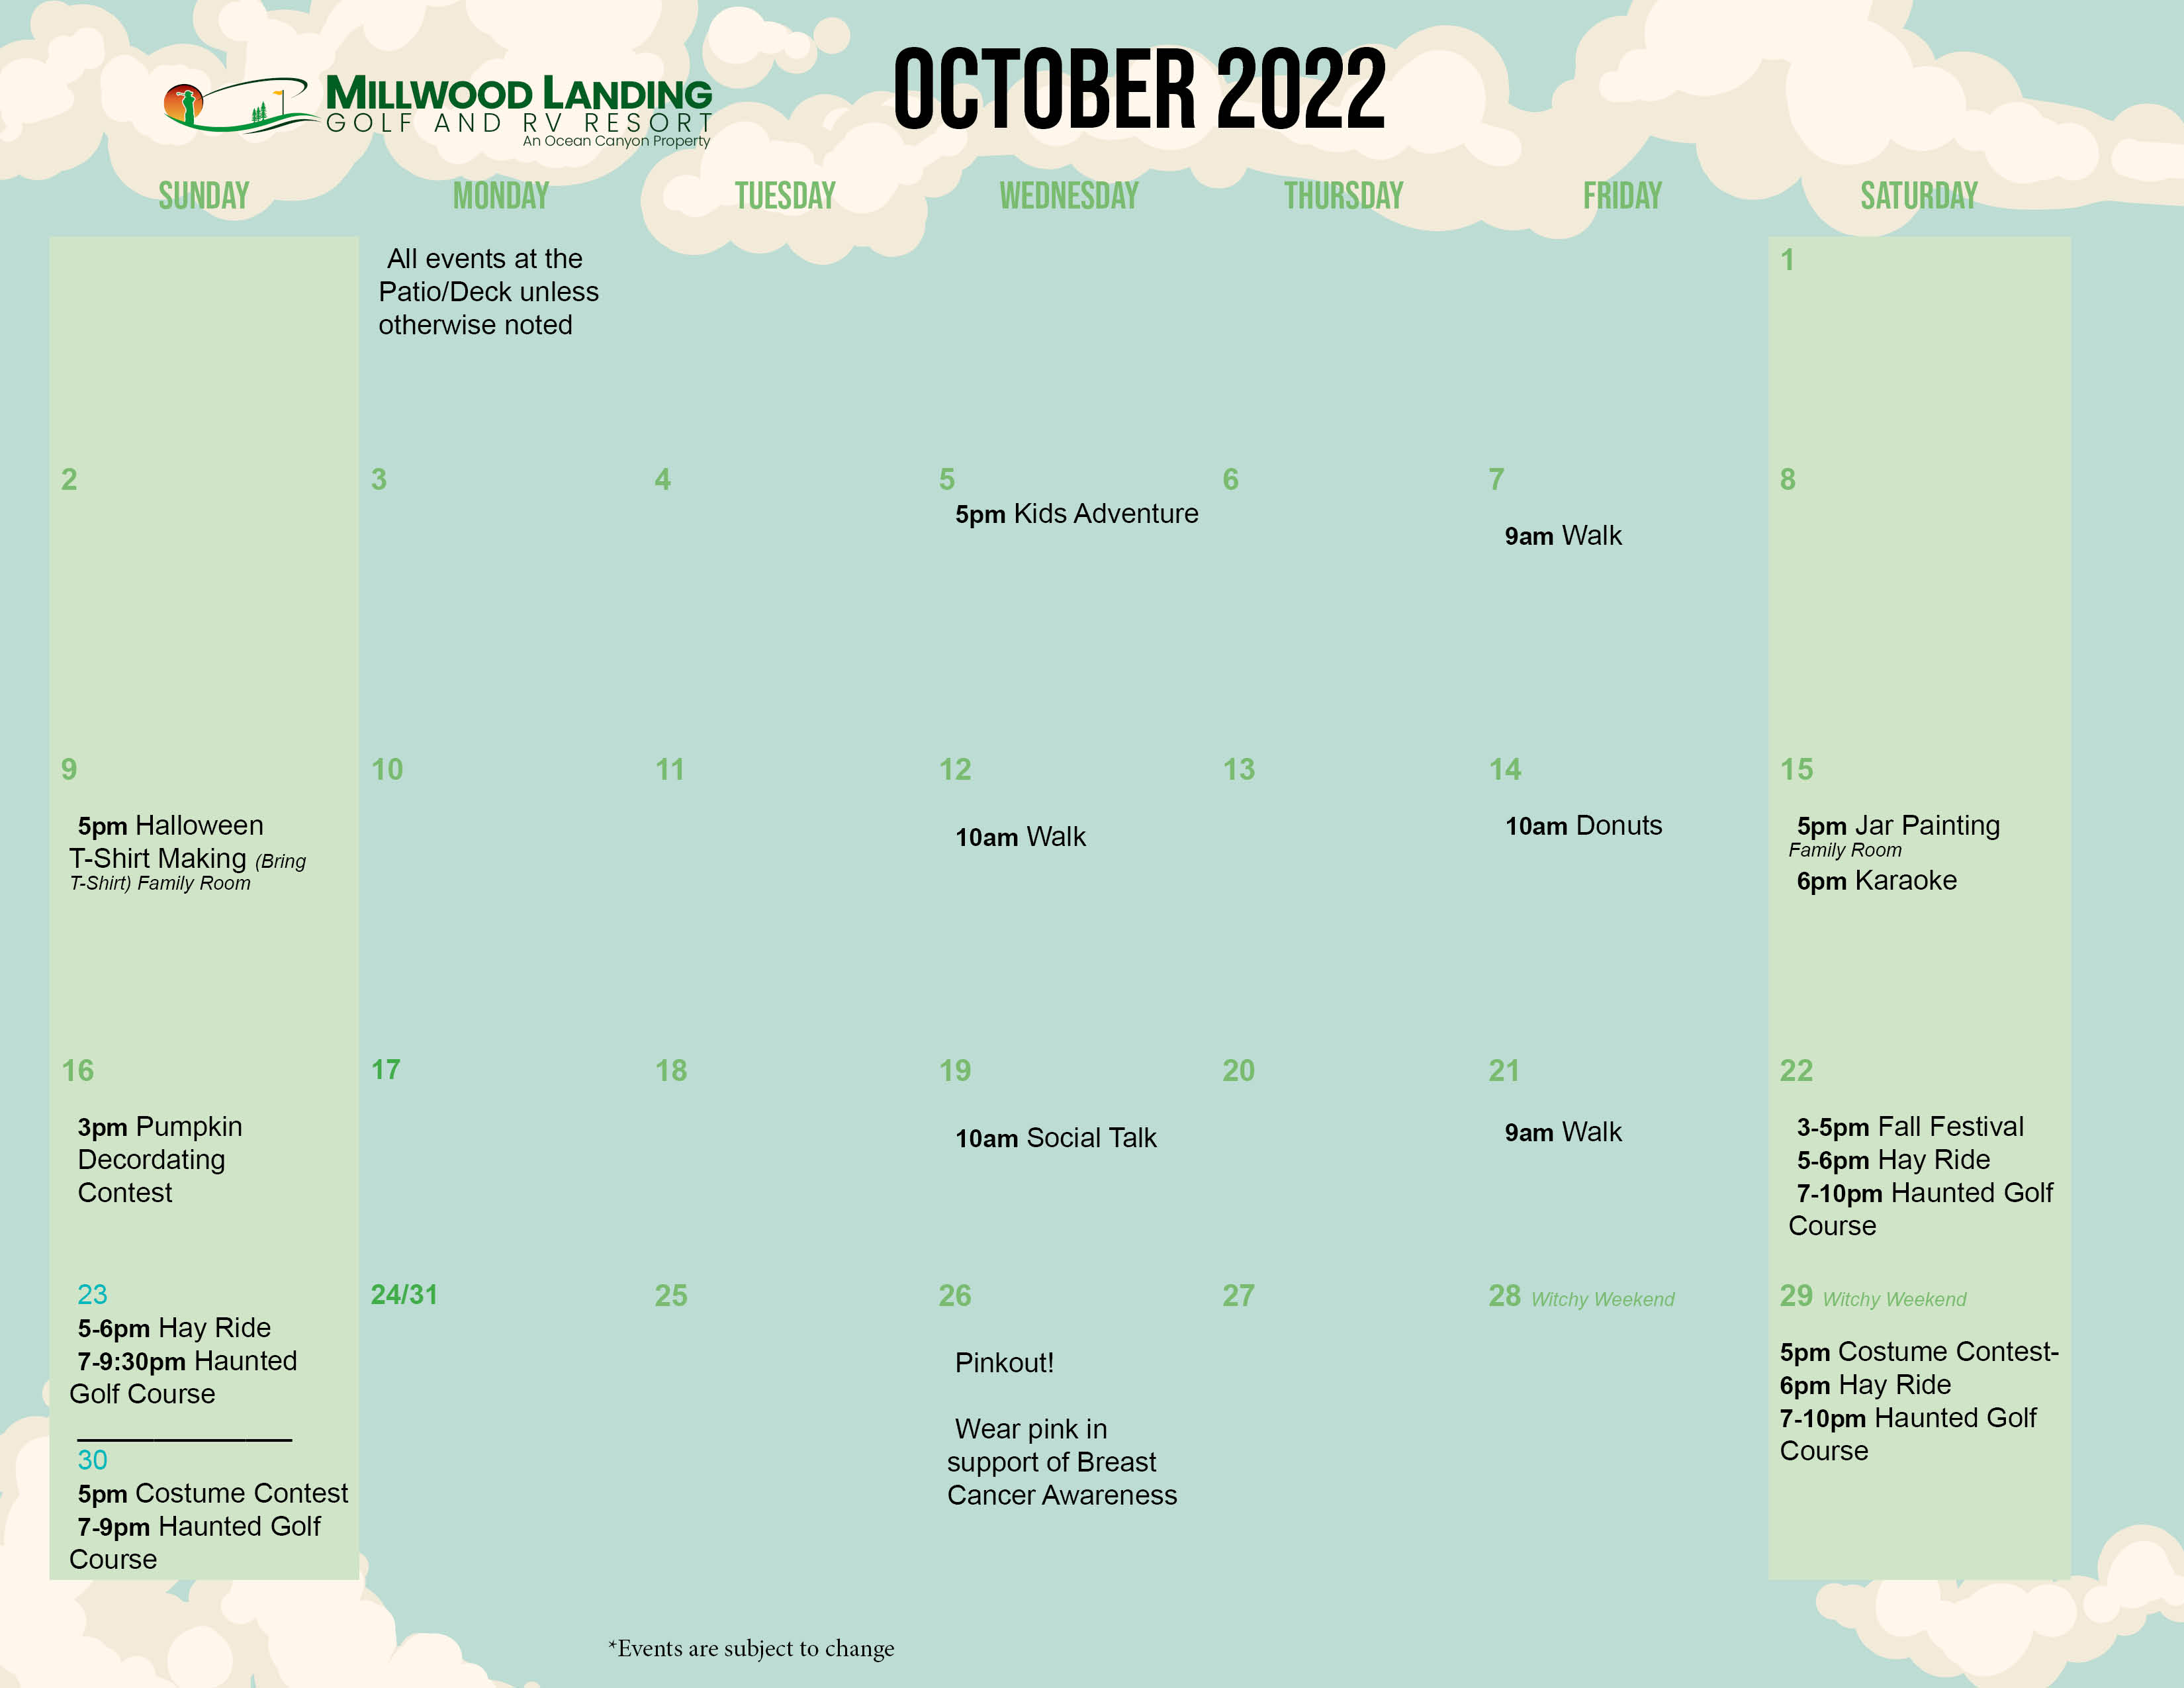 Millwood Landing's October Activity Calendar